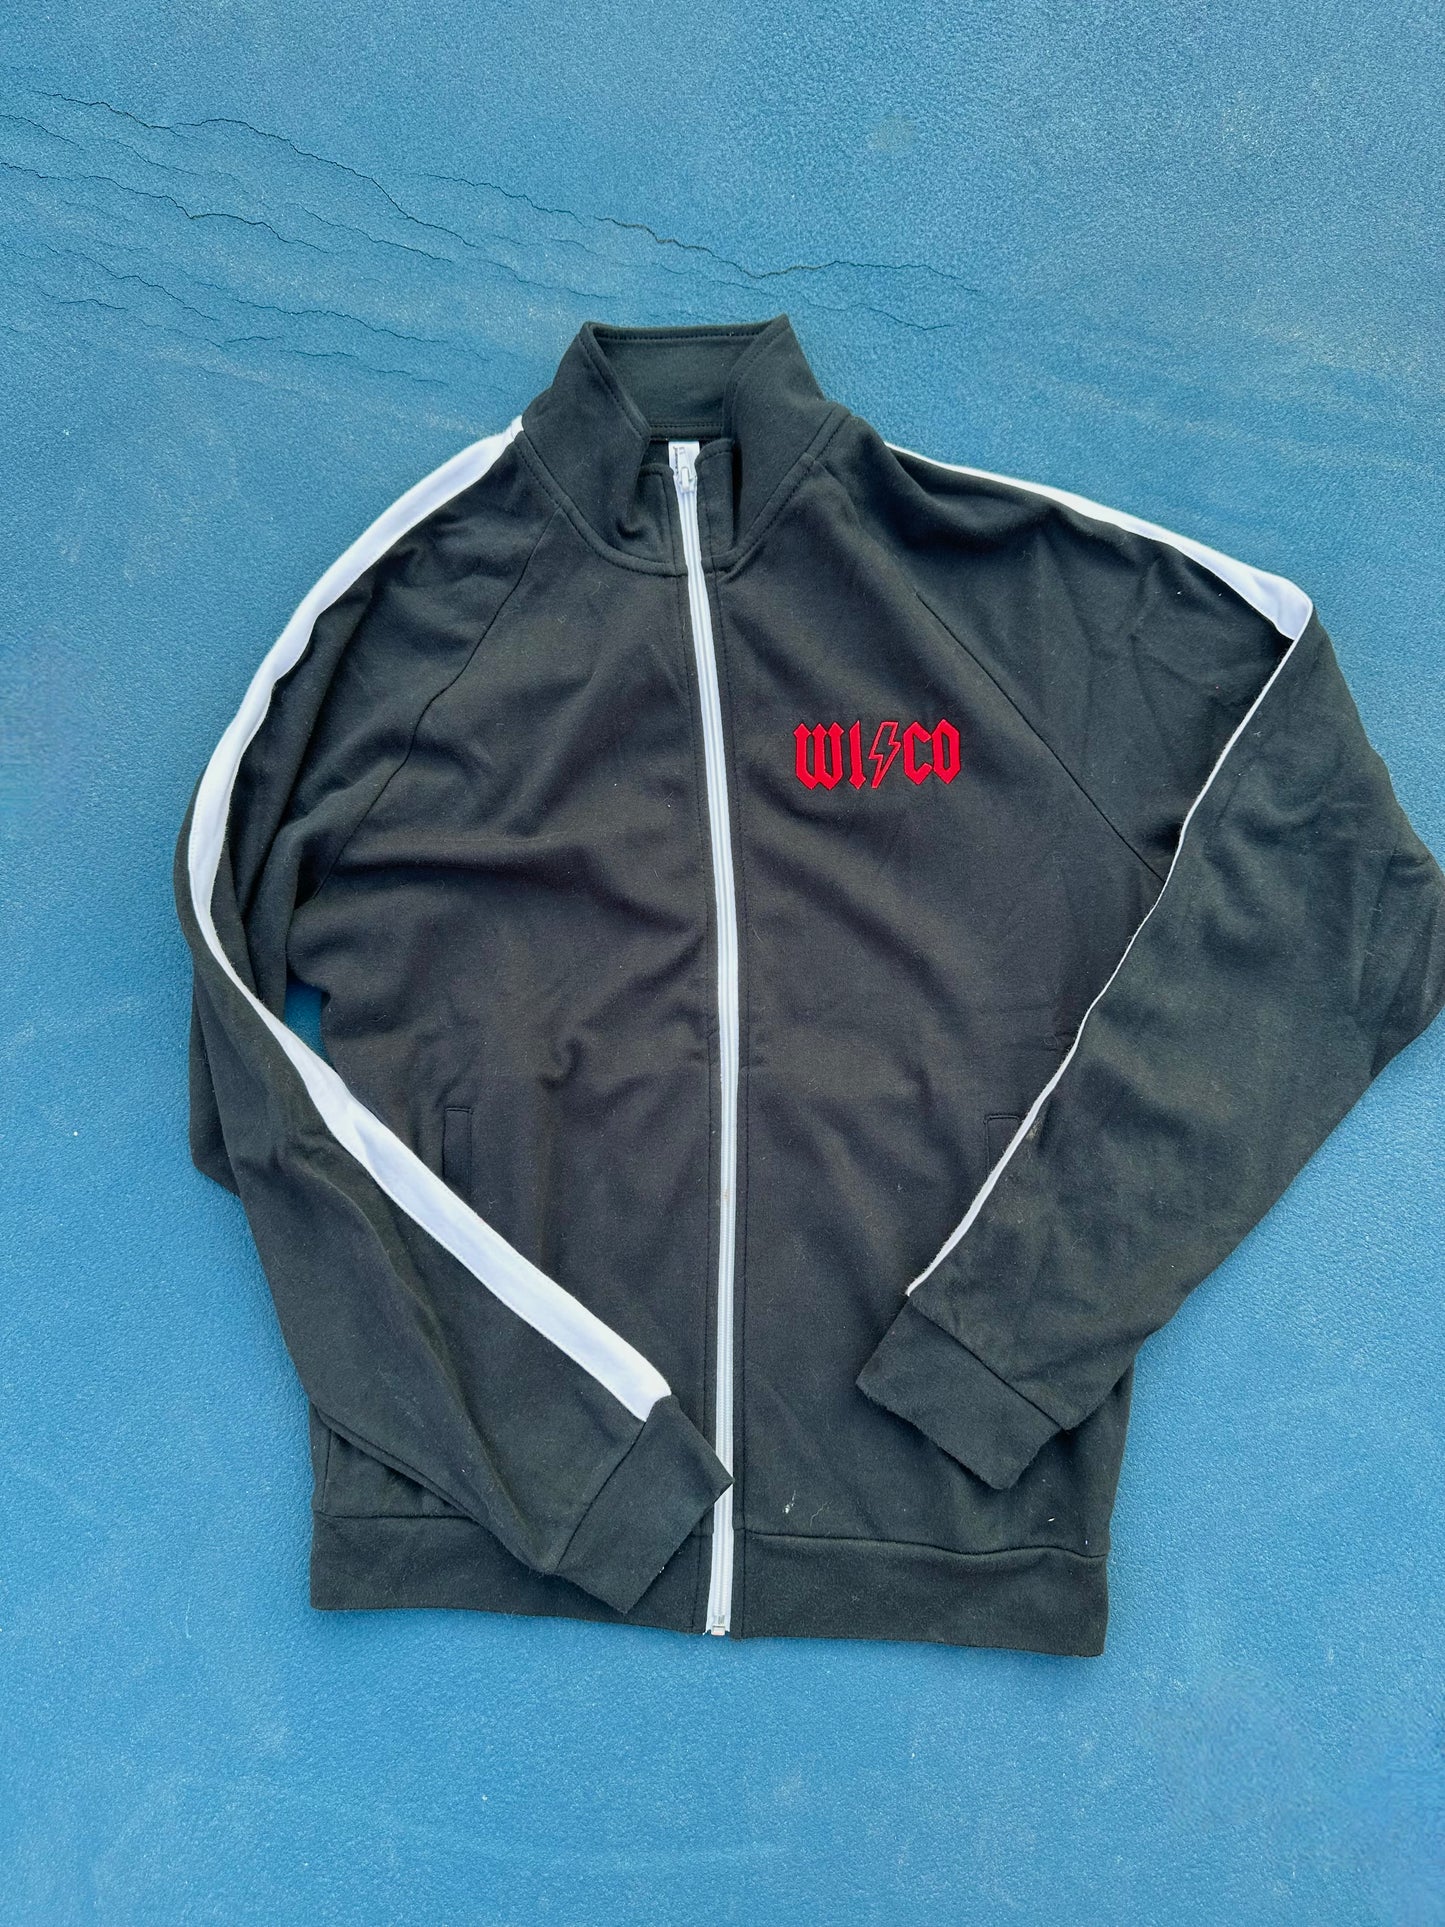 Wisco Bolt Black Track Jacket